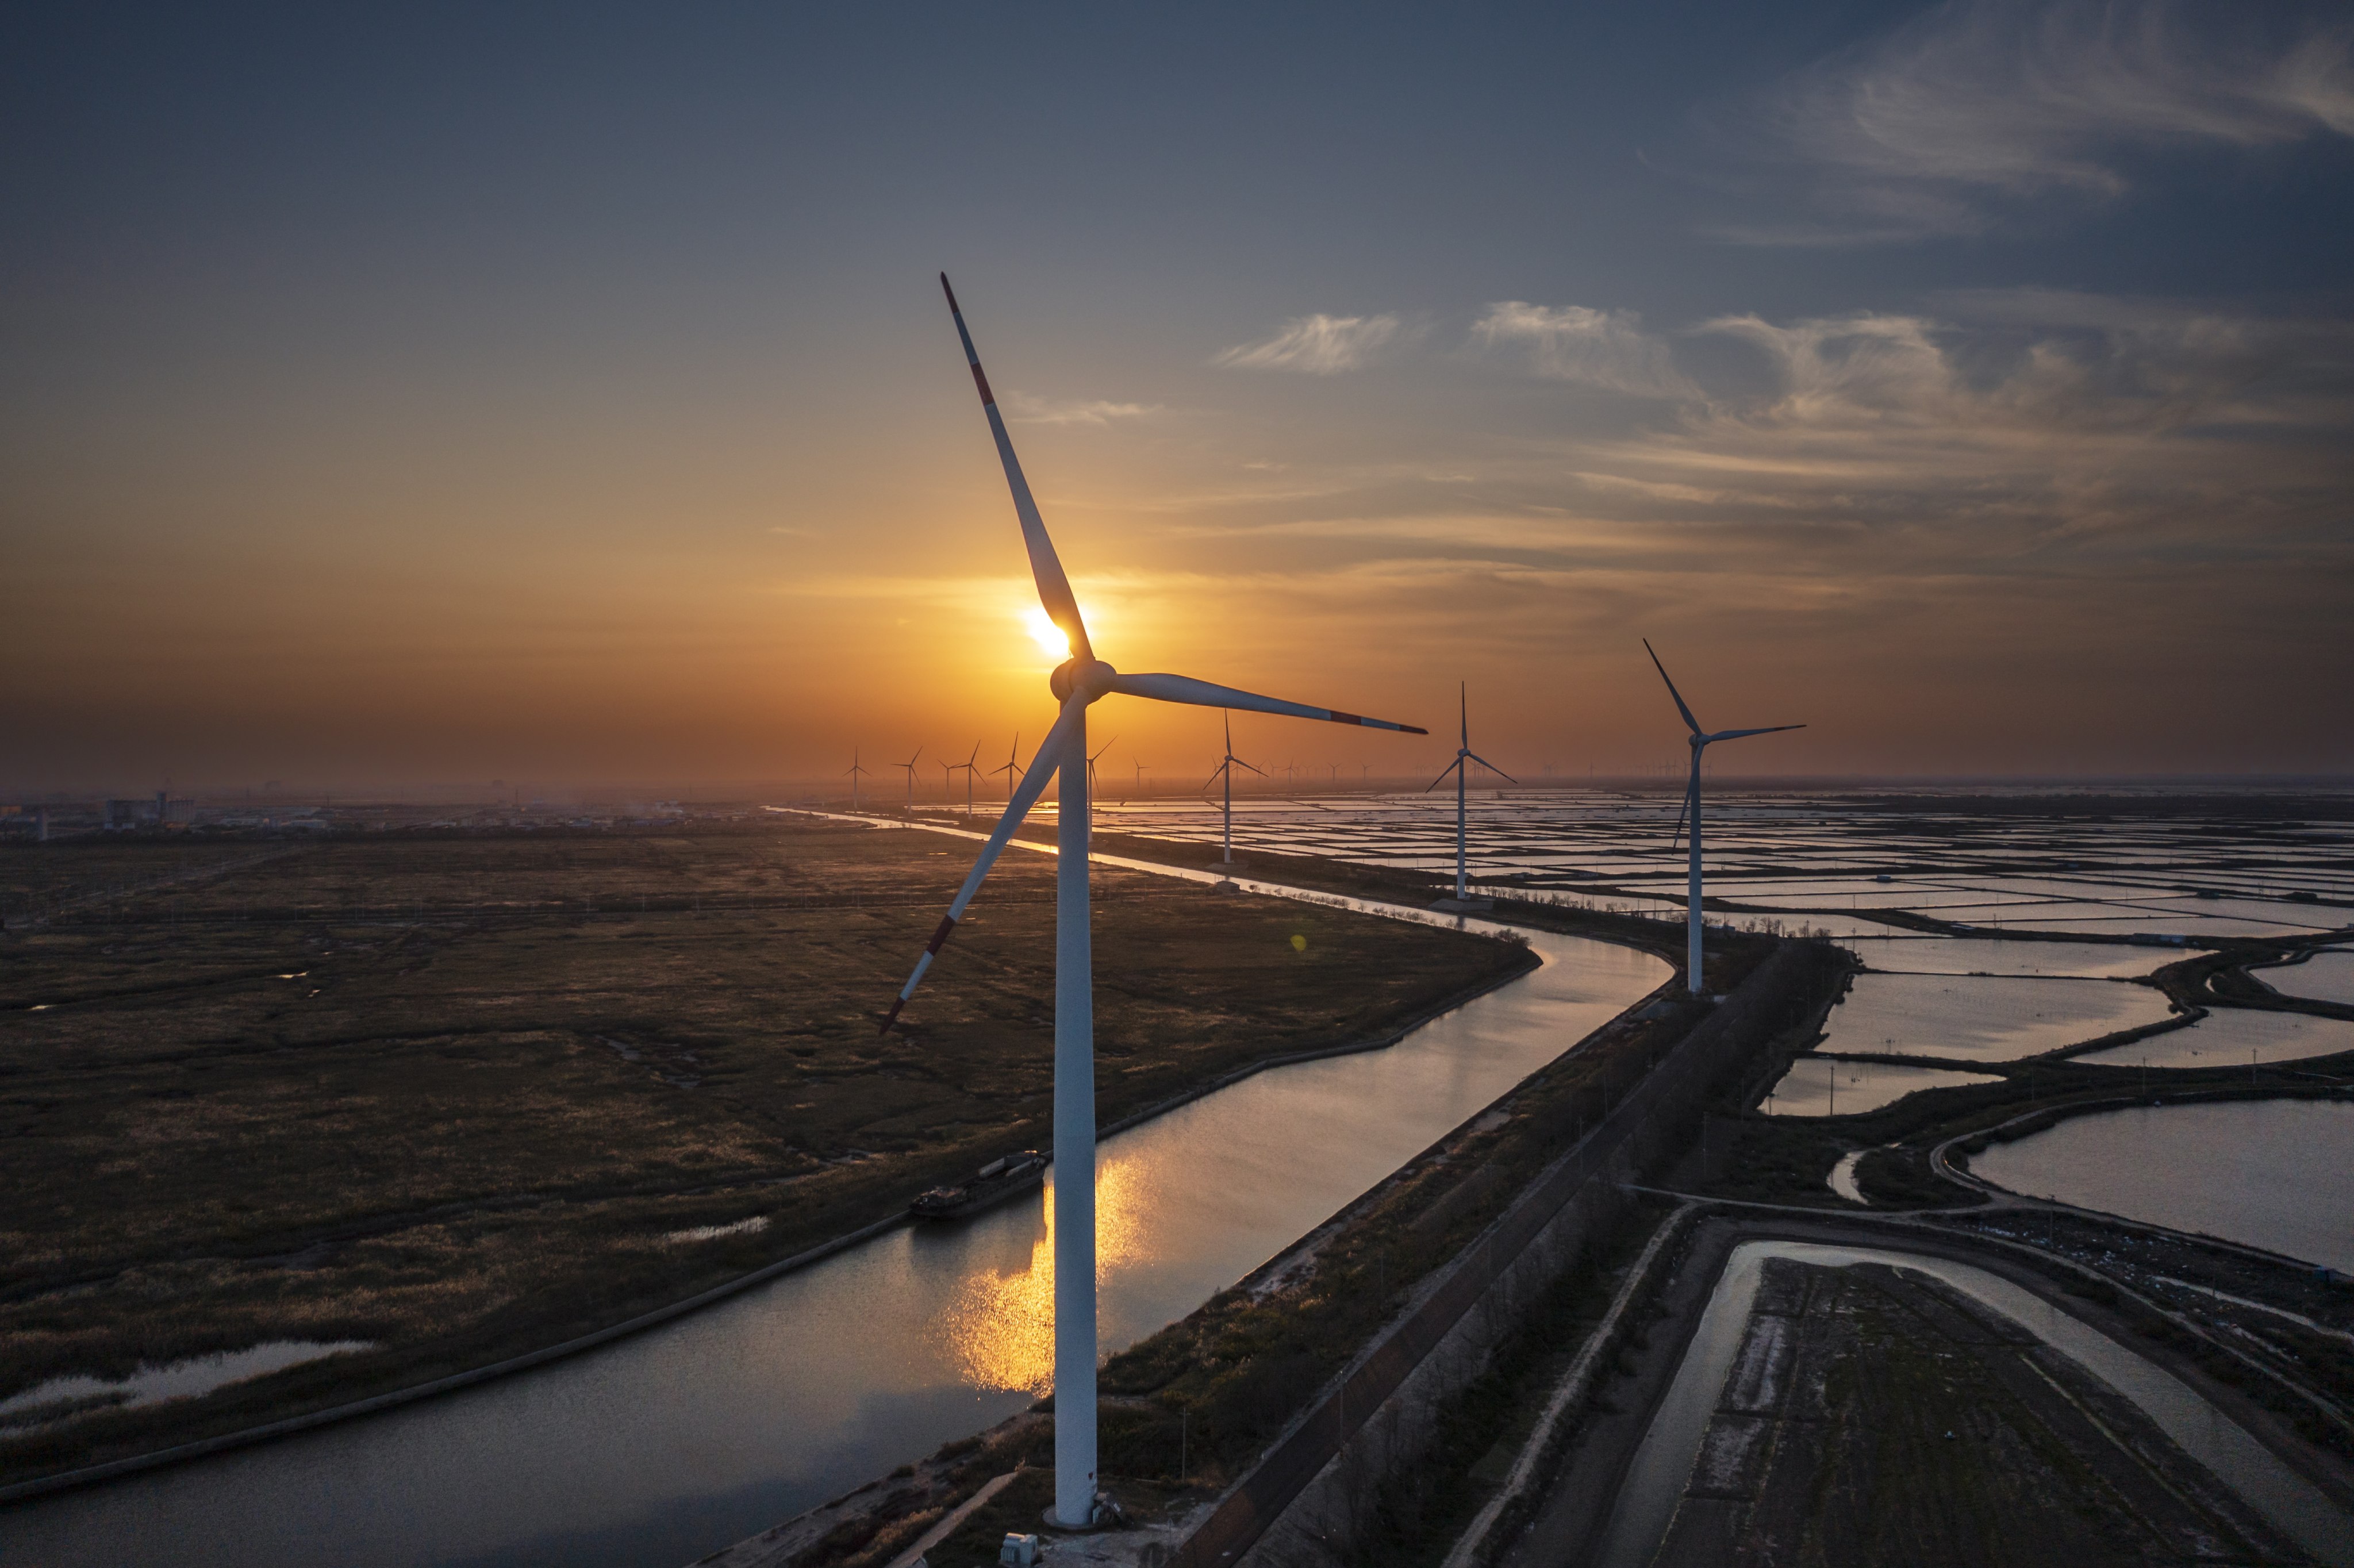 Wind turbines in Yancheng, Jiangsu province, China, pictured on October 27, 2021. Photo: EPA-EFE